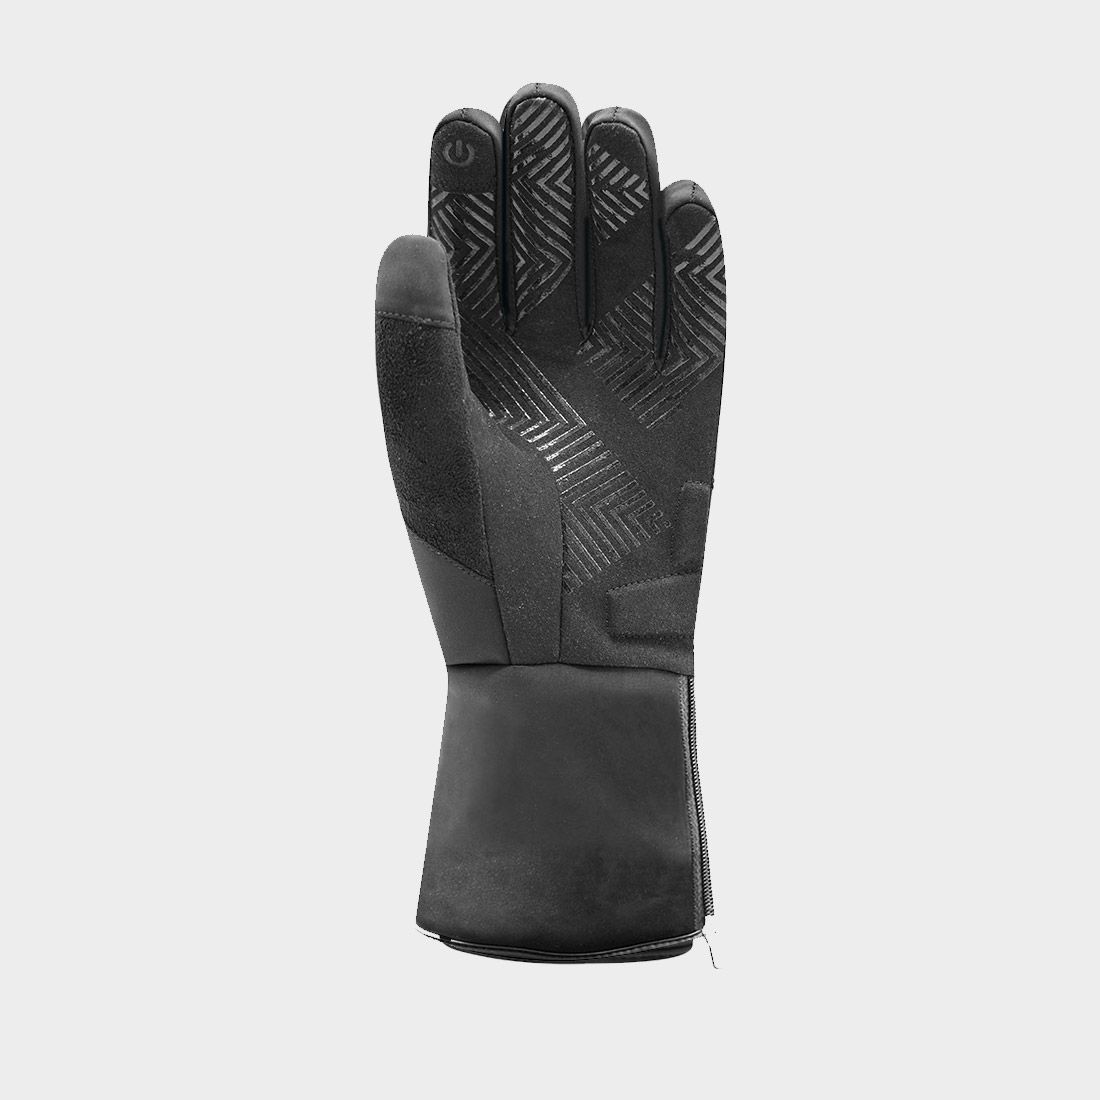 E-GLOVE 4 - Heated cycling gloves